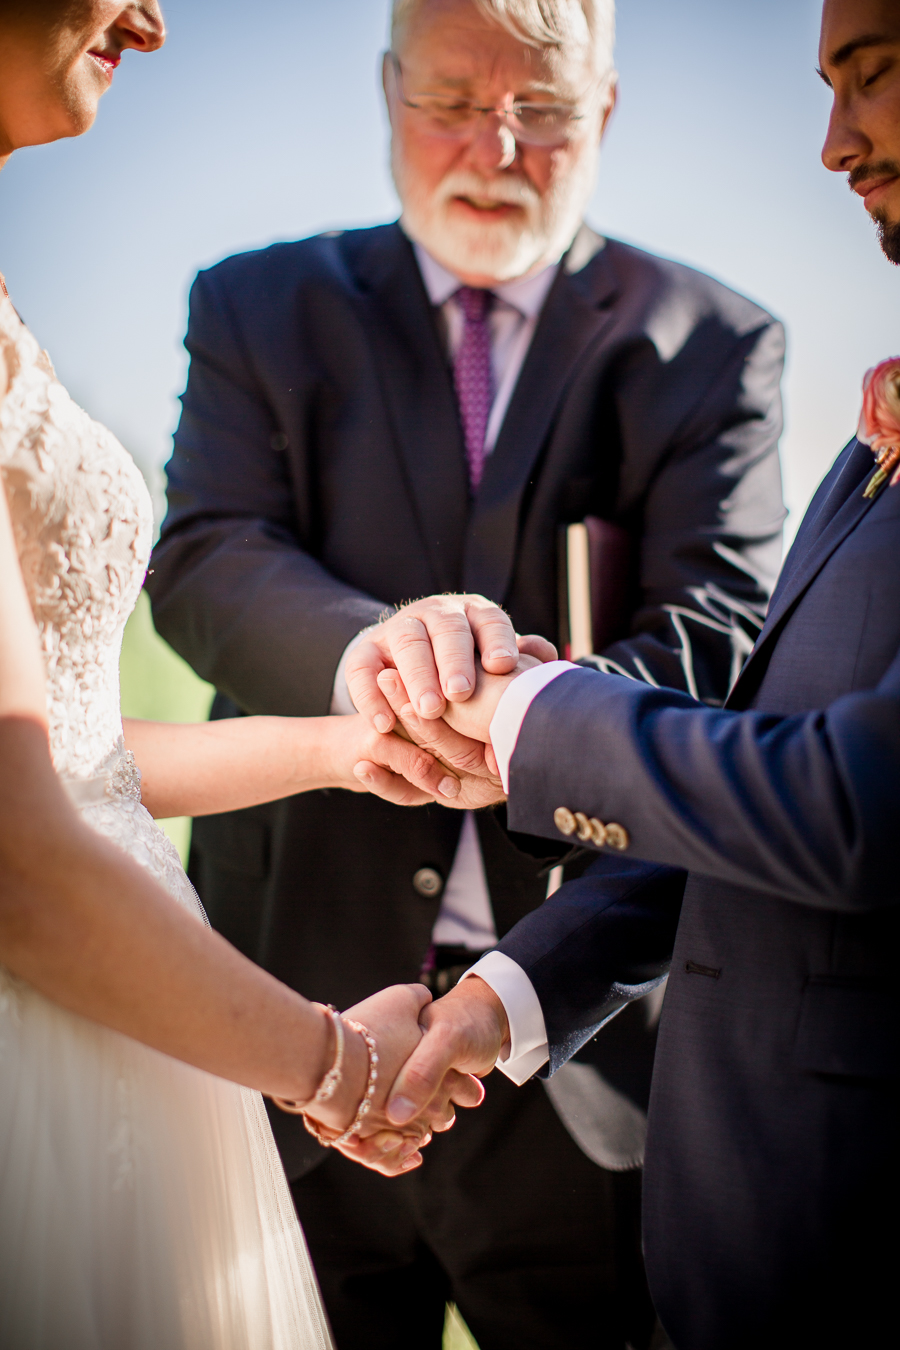 Holding hands at this North Carolina Elopement by Knoxville Wedding Photographer, Amanda May Photos.